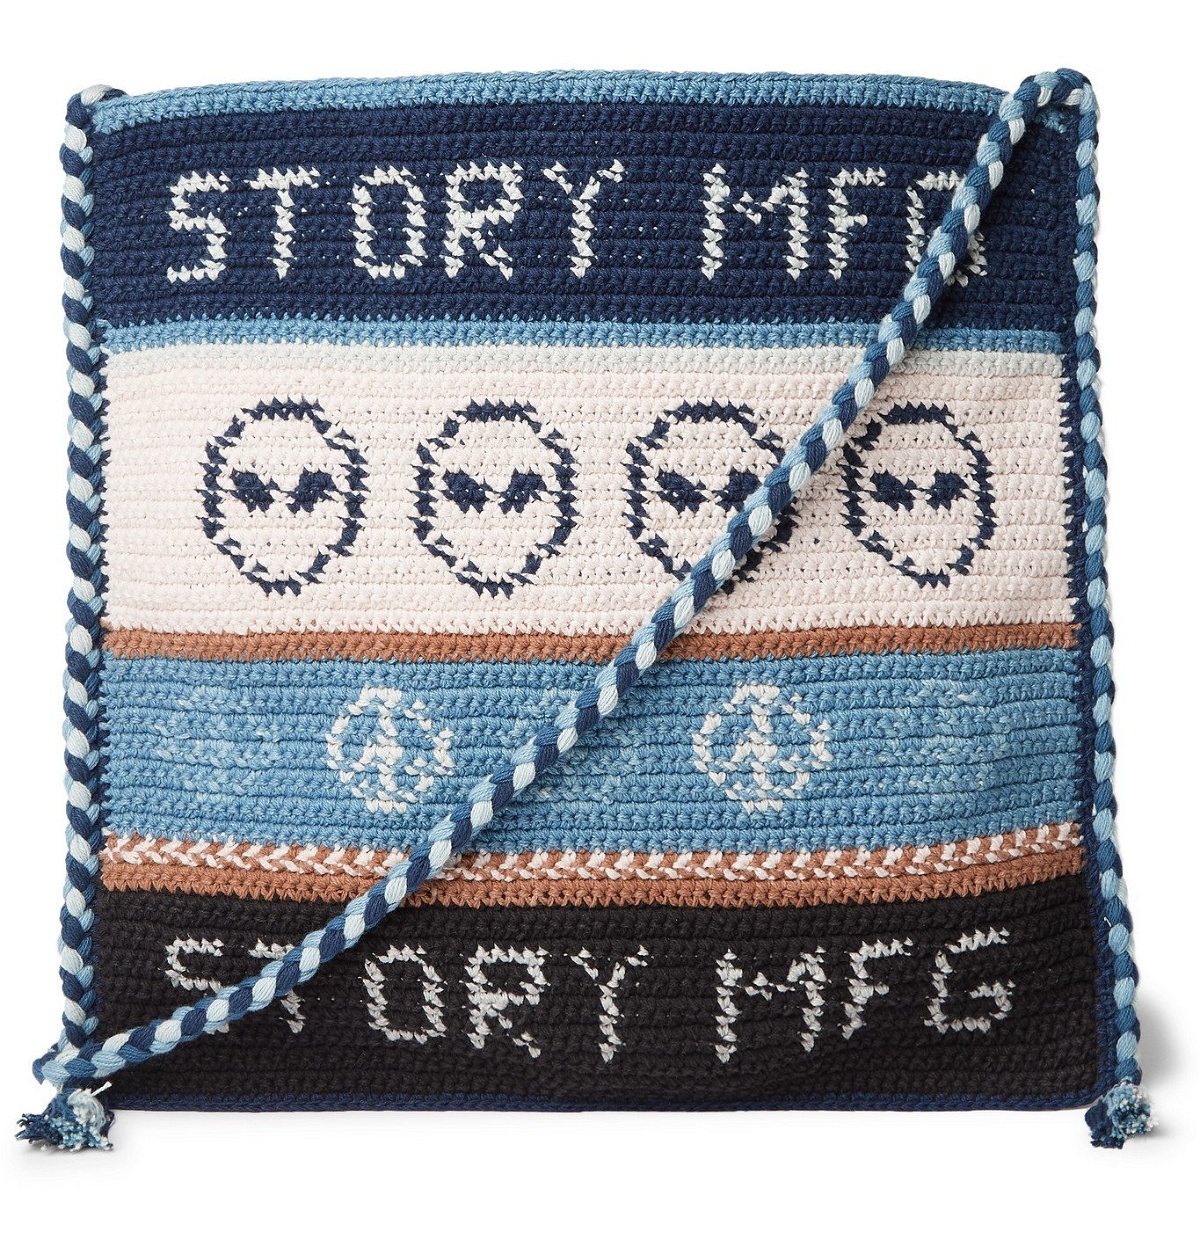 Story Mfg. - Stash Tasselled Crochet-Knit Organic Cotton Messenger